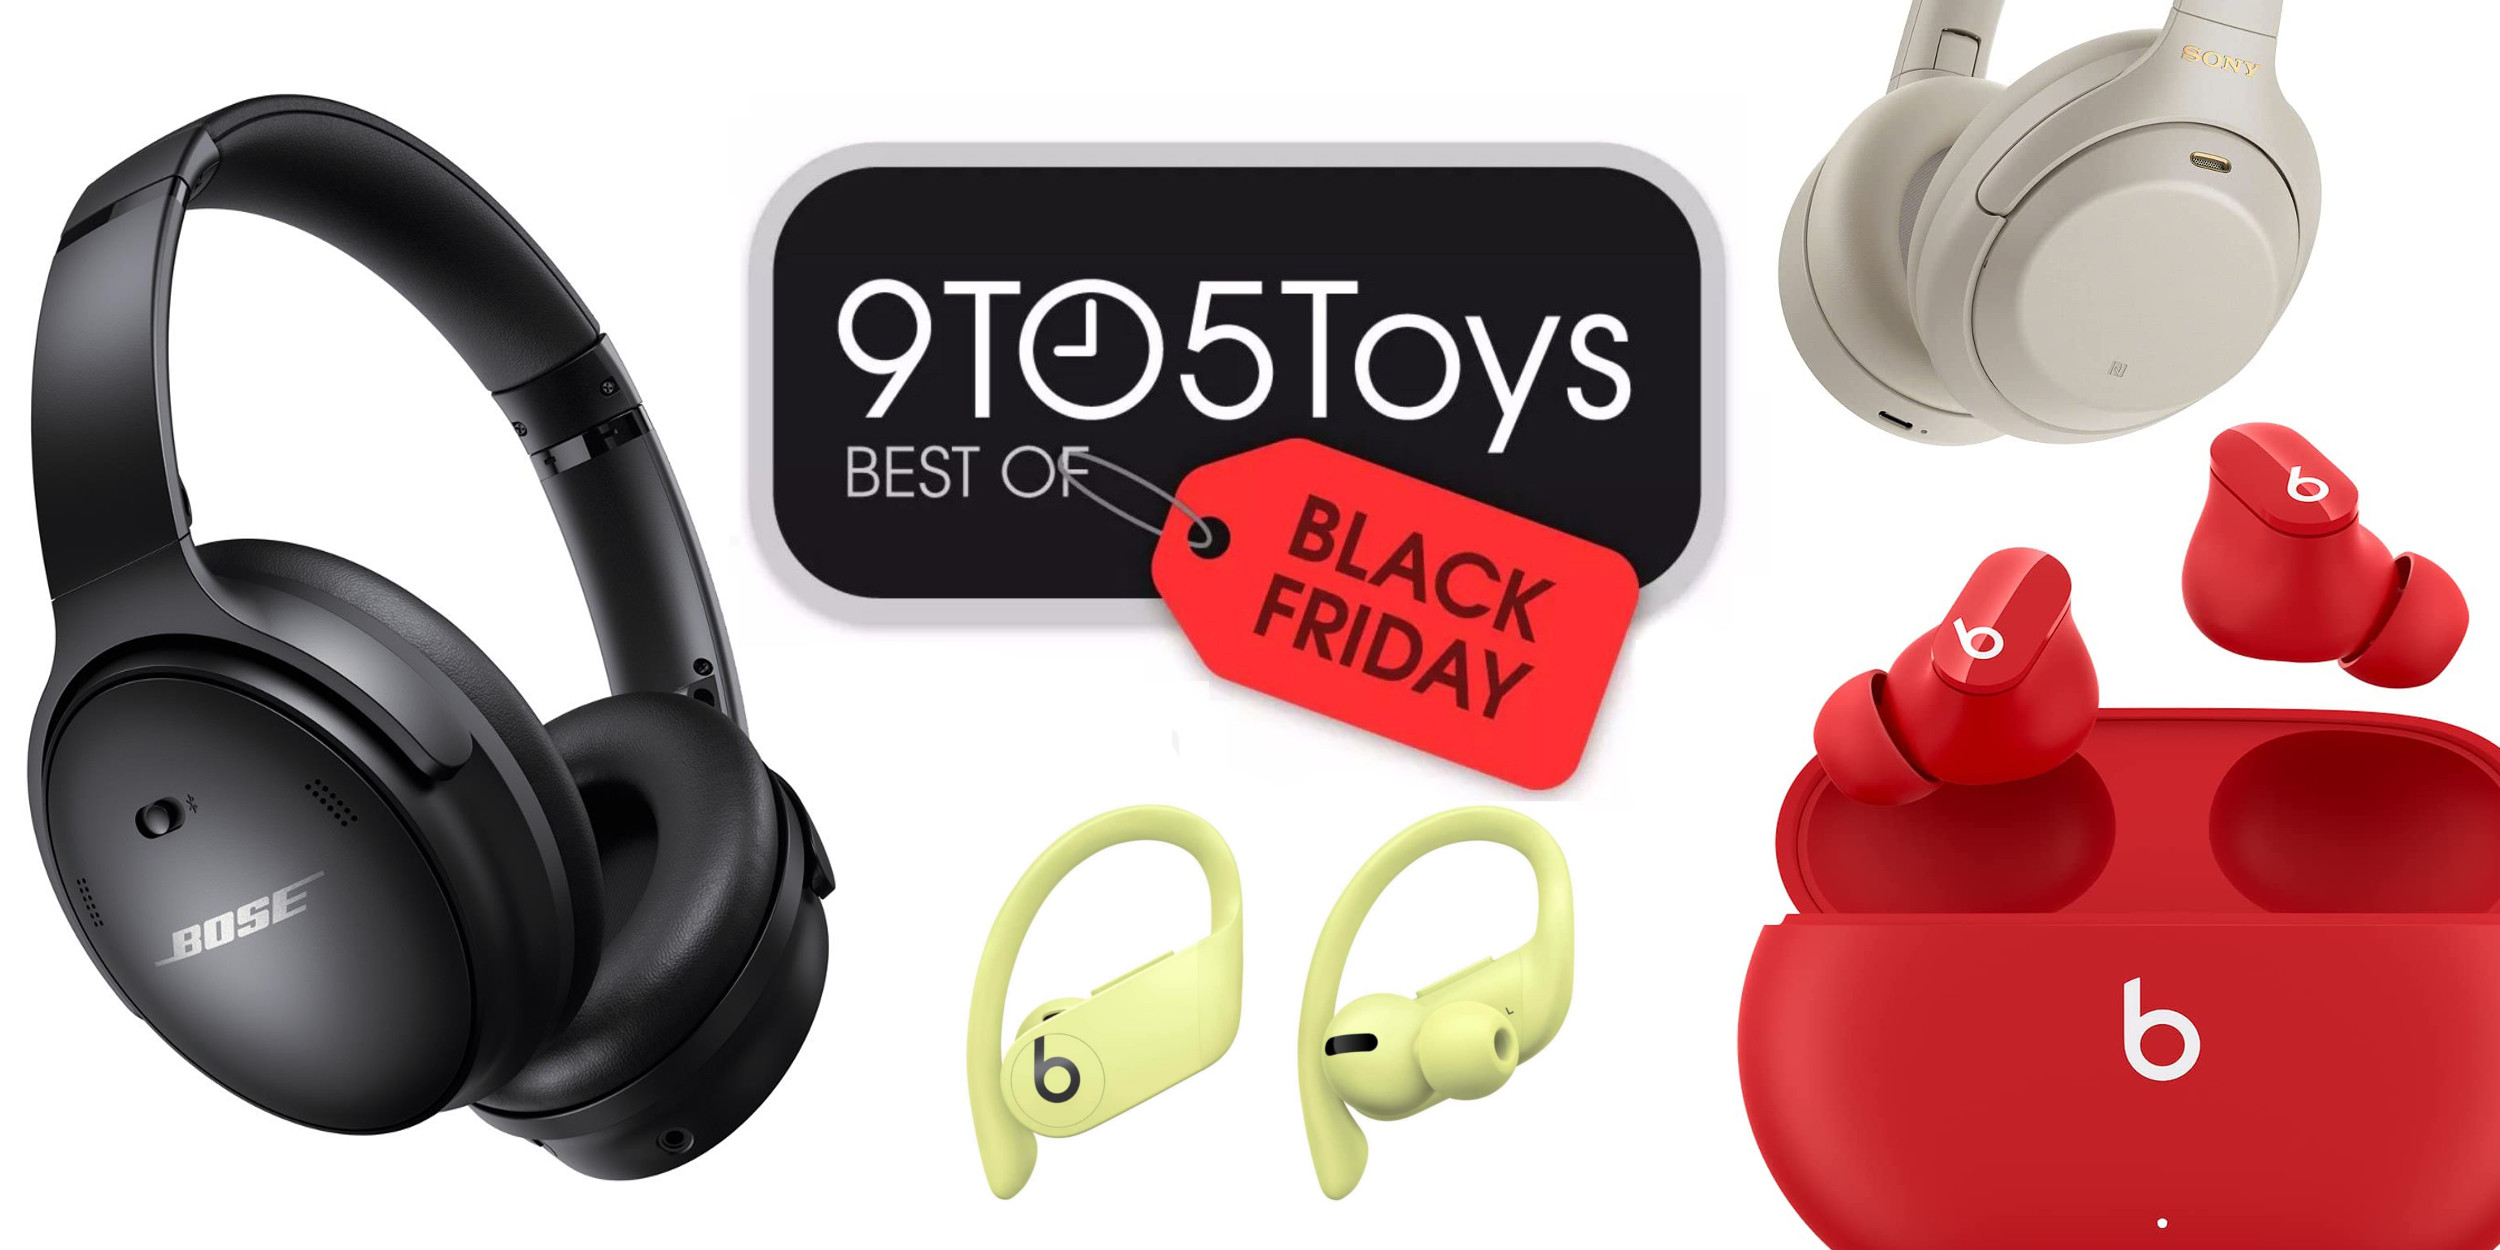 Best of Black Friday 2021 Headphones allnew Bose, Beats Studio Buds